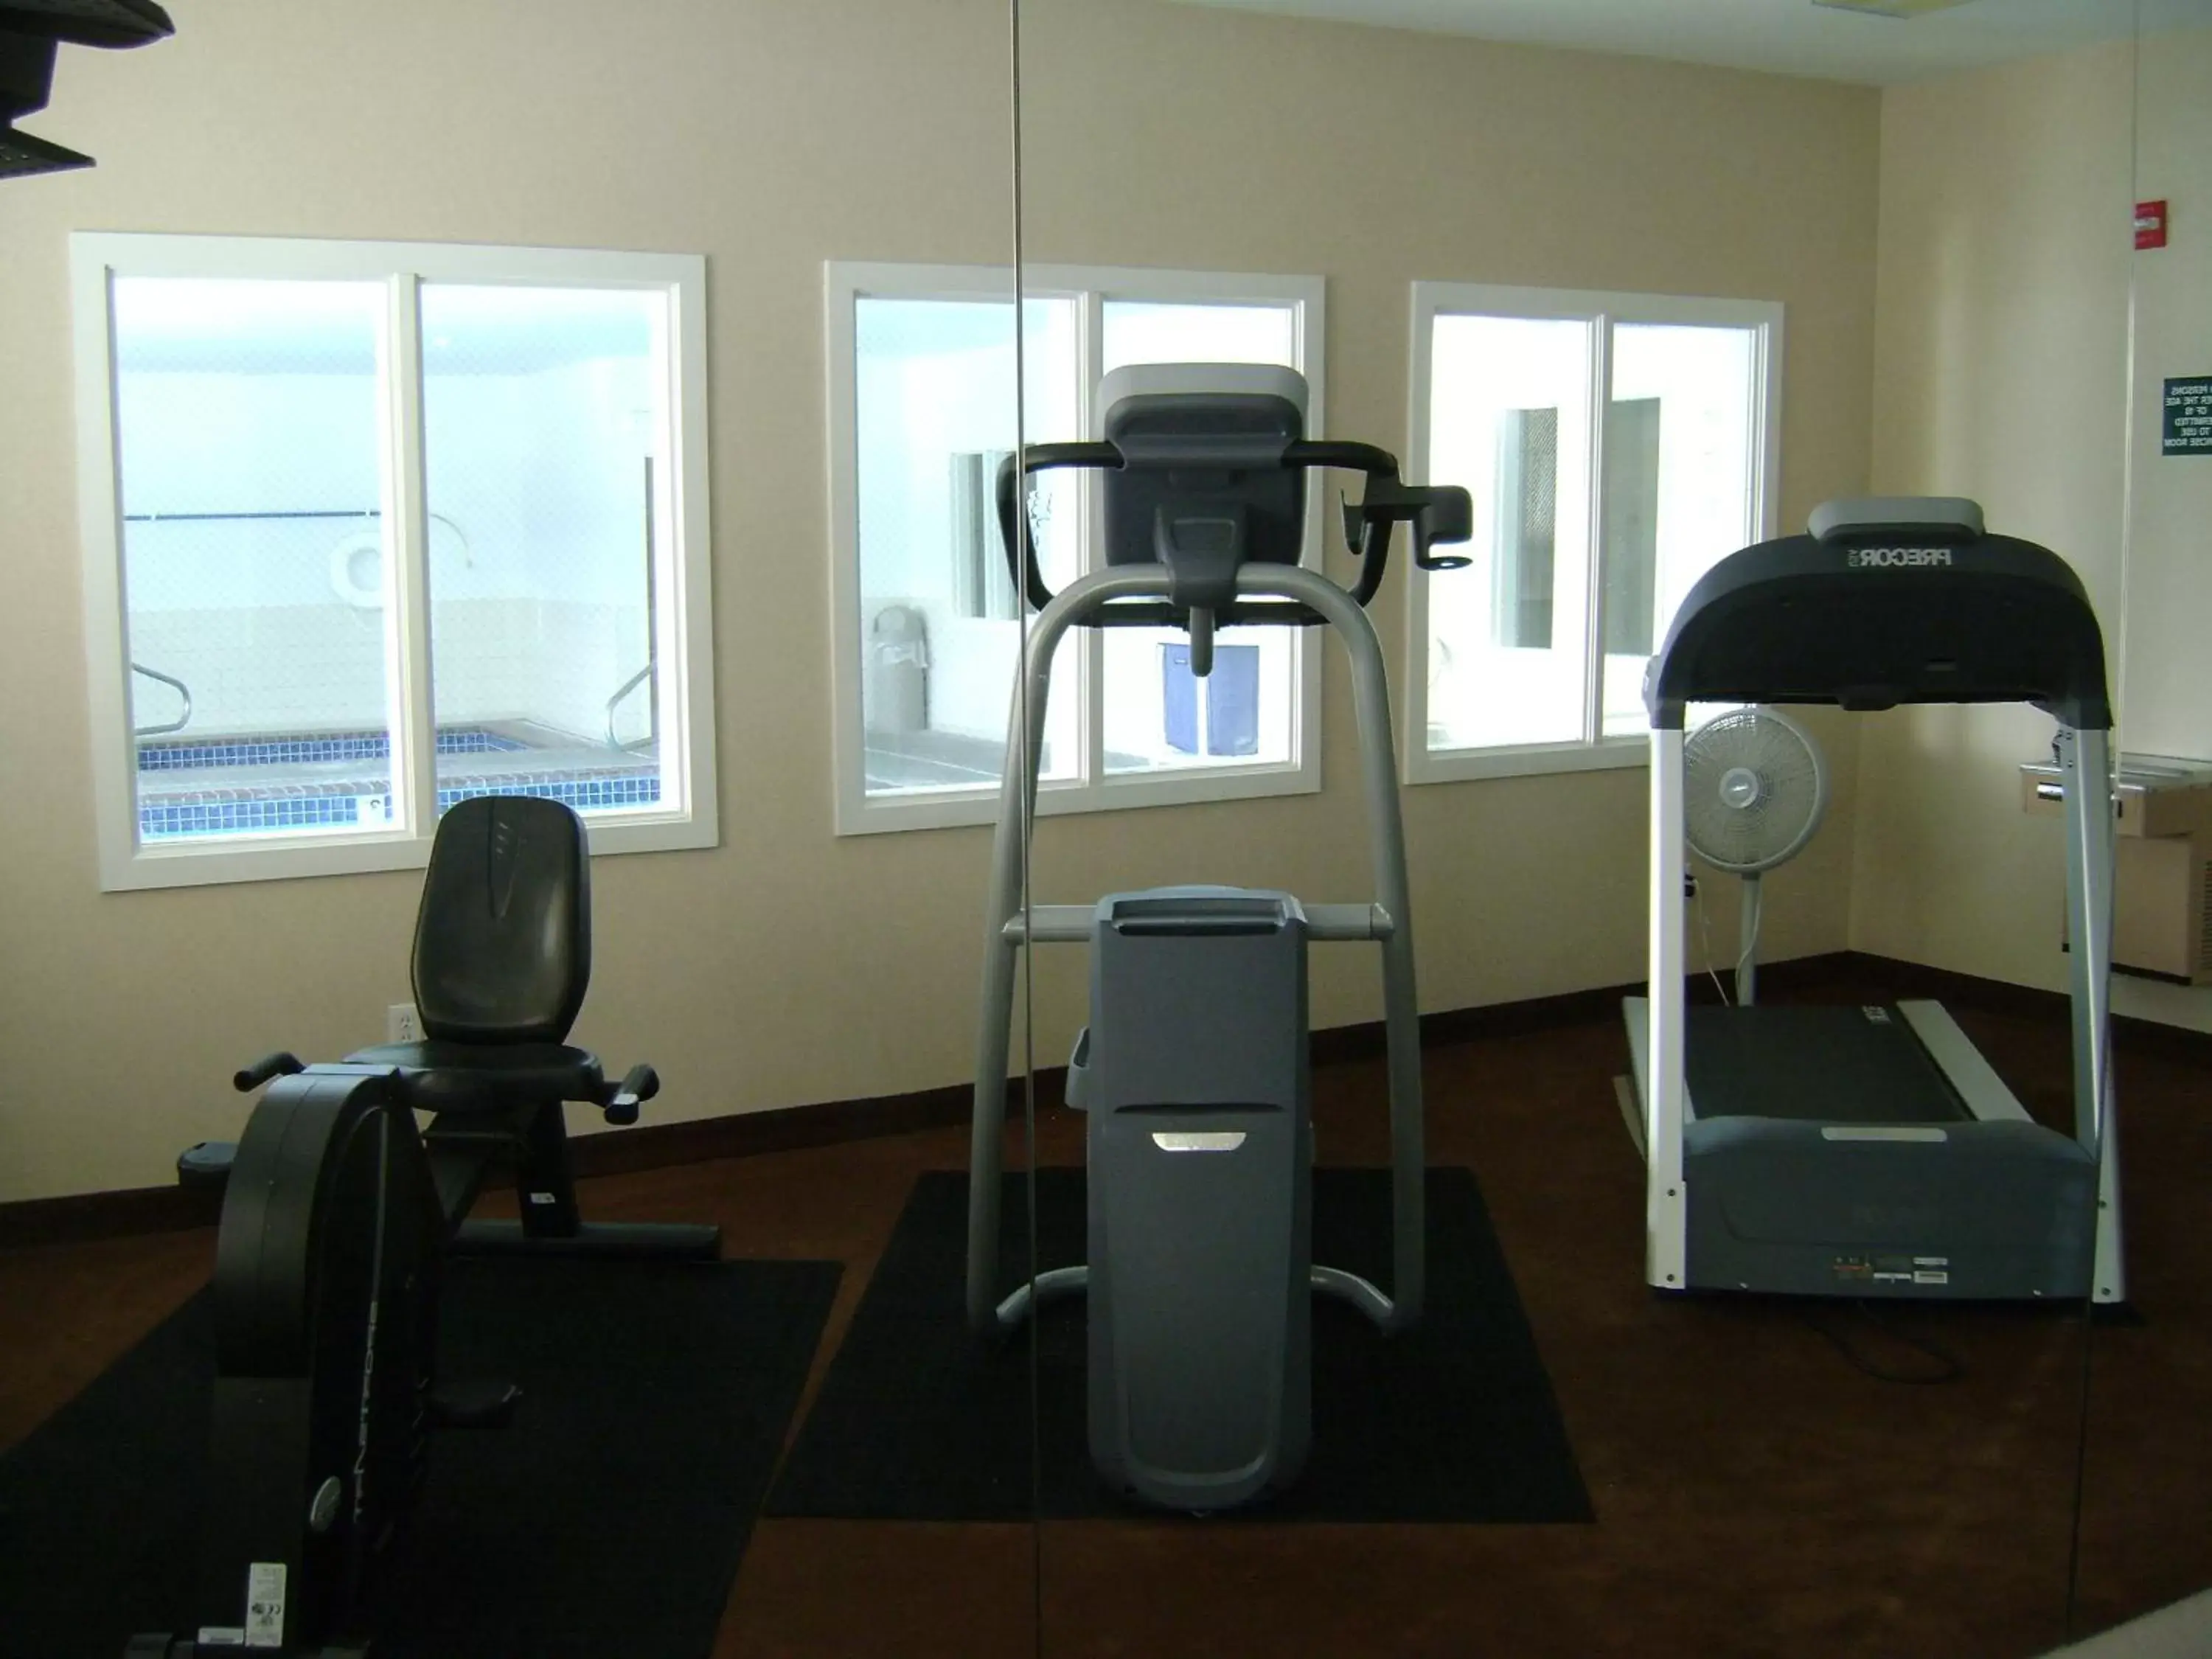 Fitness centre/facilities, Fitness Center/Facilities in Aspen Hotel